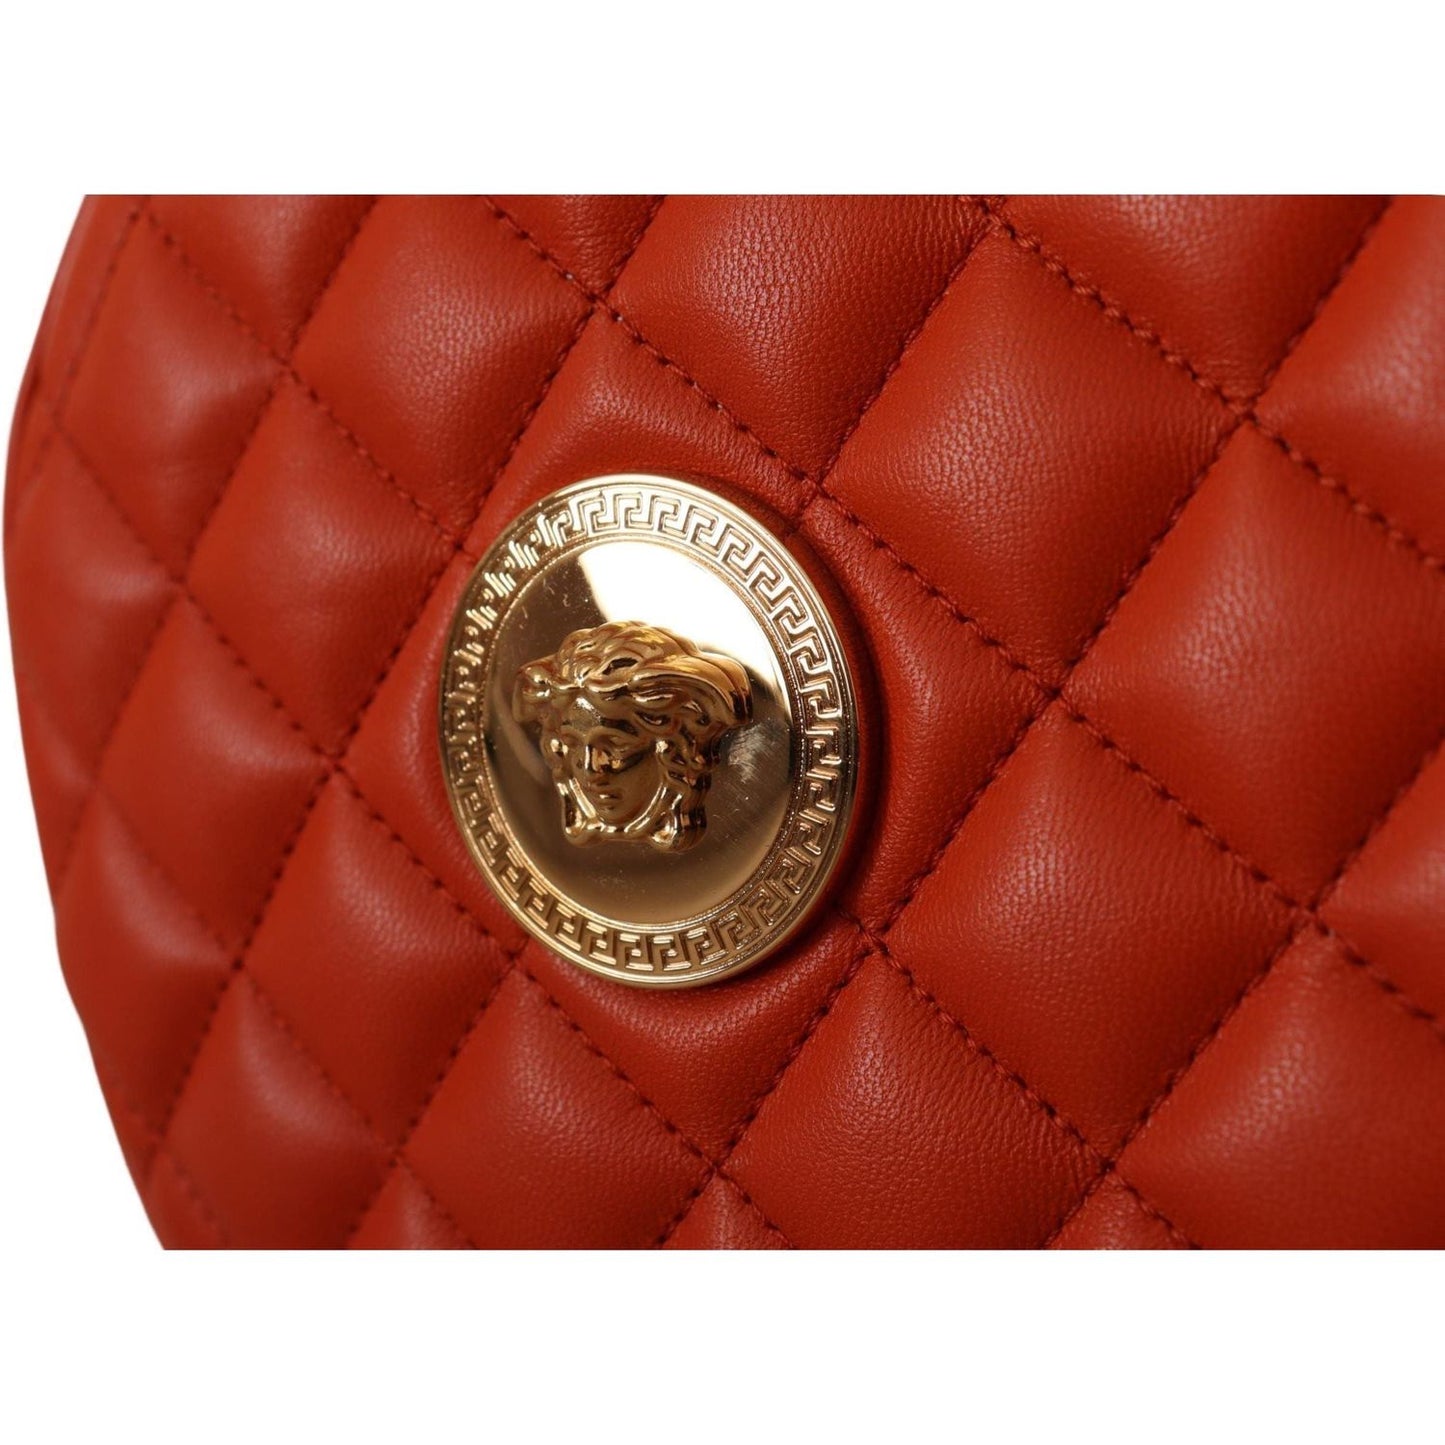 Versace Elegant Round Nappa Leather Crossbody Bag red-nappa-leather-medusa-round-crossbody-bag Crossbody Bag IMG_8871-scaled-17c9b163-c1a.jpg